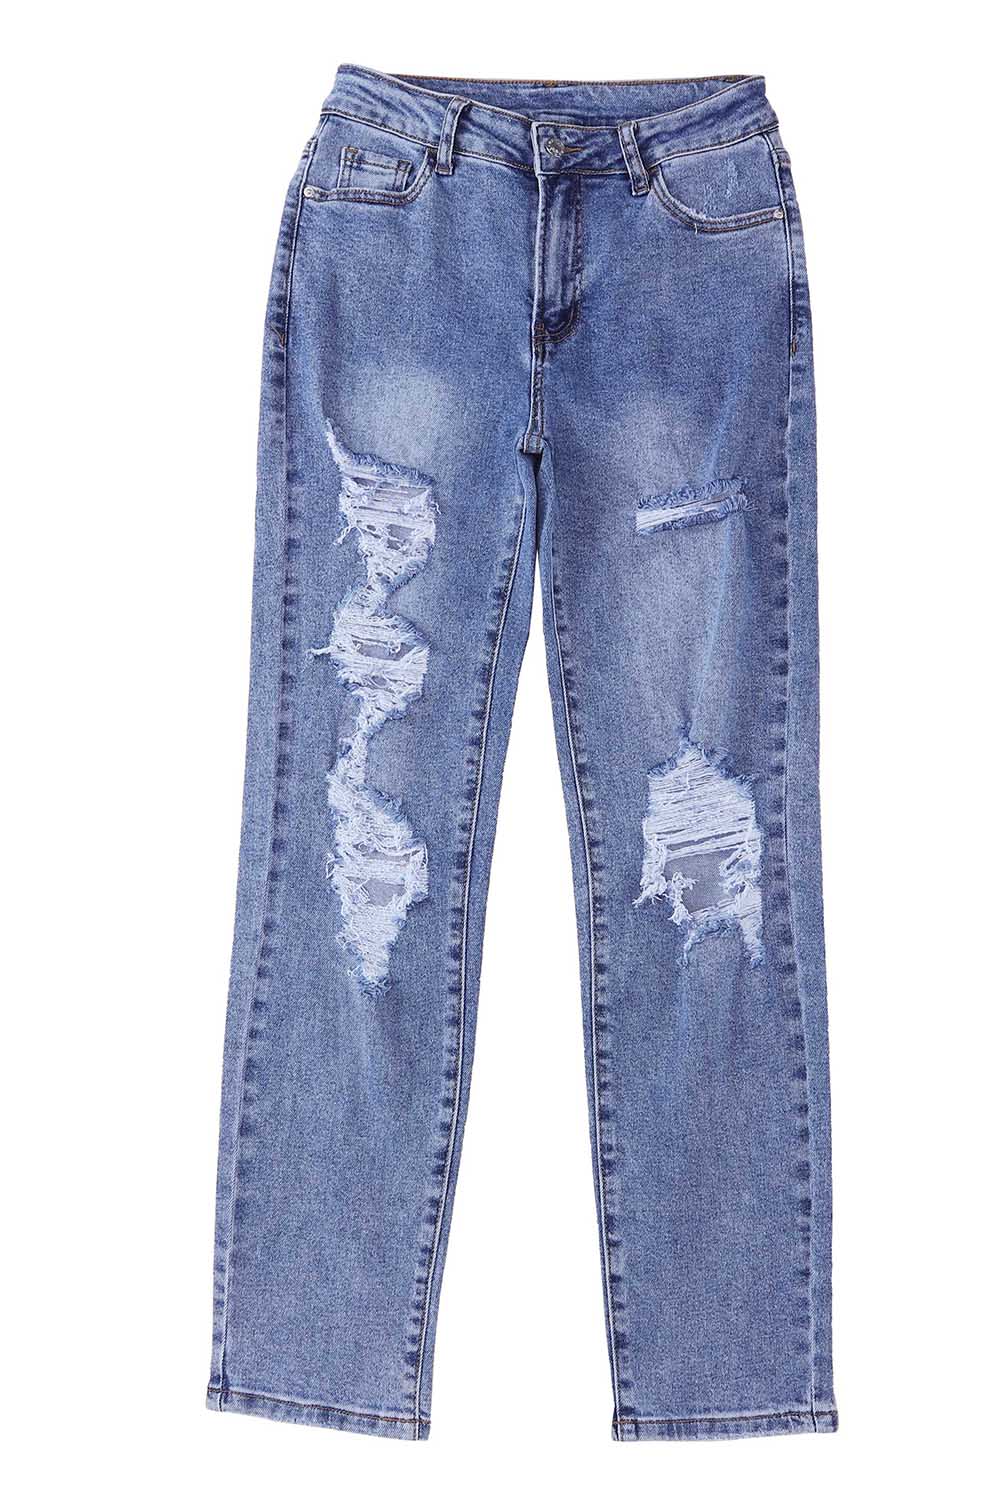 Sky Blue Heavy Destroyed Big Hole Boyfriend Jeans - SELFTRITSS